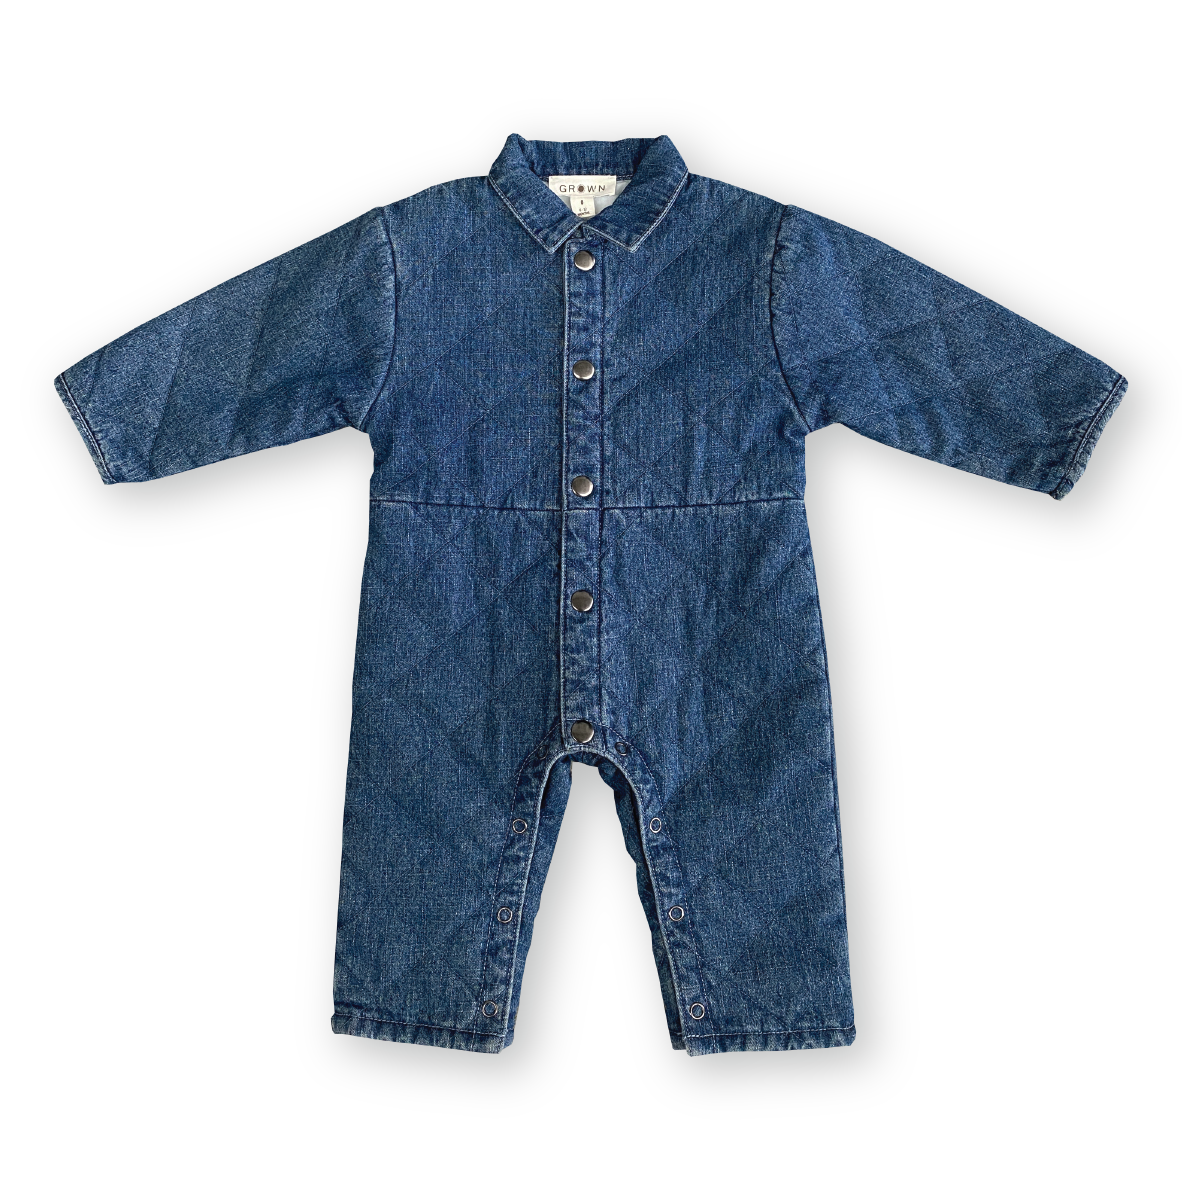 Quilted Hemp Denim Boiler Suit - Denim - Child Boutique